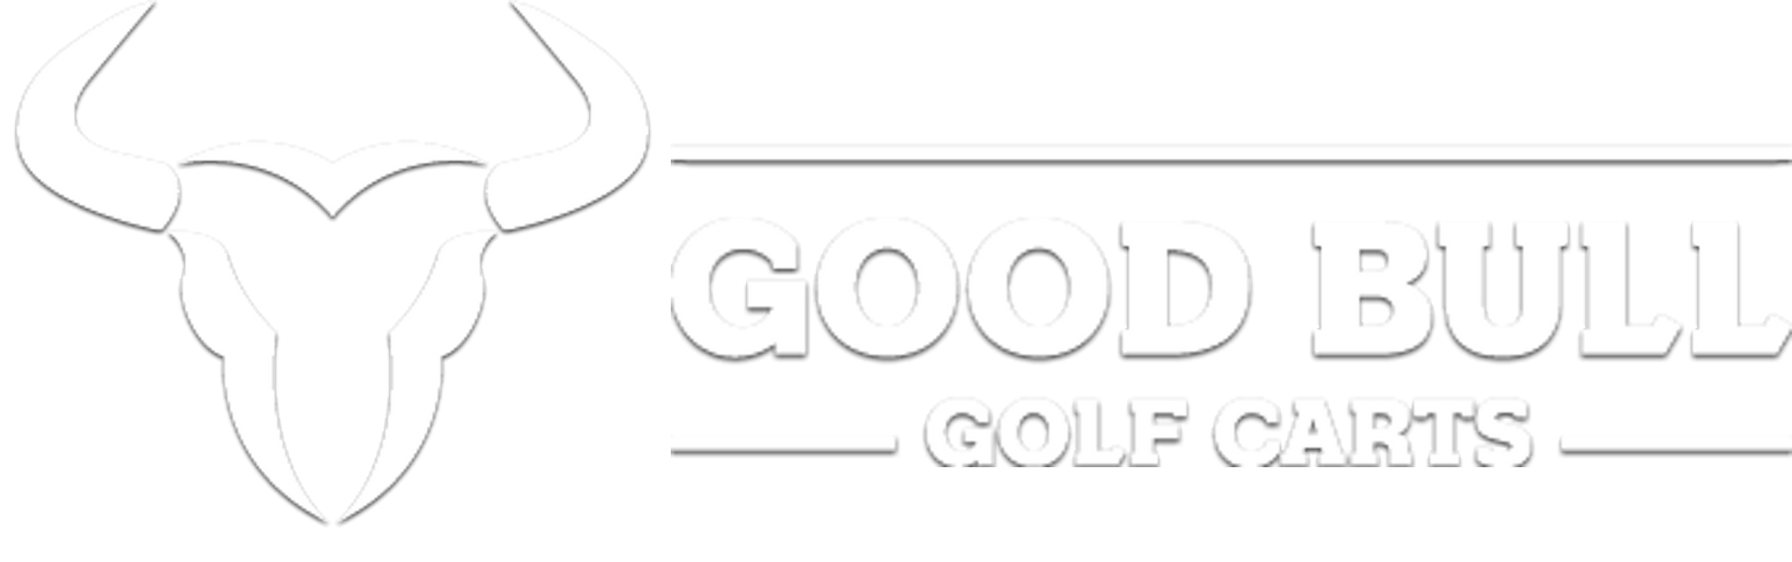 Good Bull Golf Carts - Logo